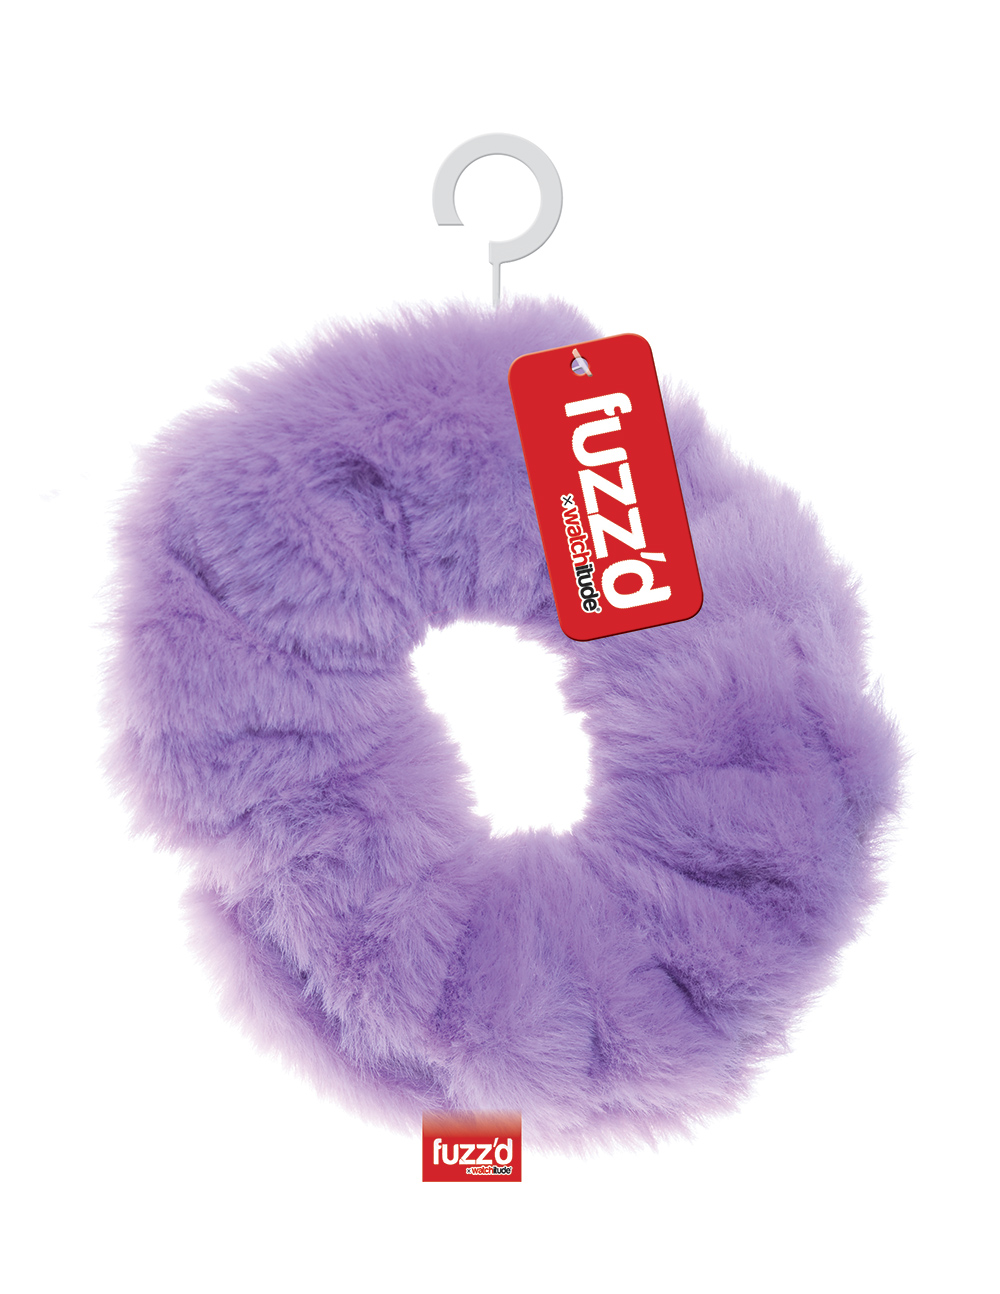 Lavender Donut - Hair Tie - Fuzz'd x Watchitude image number 1